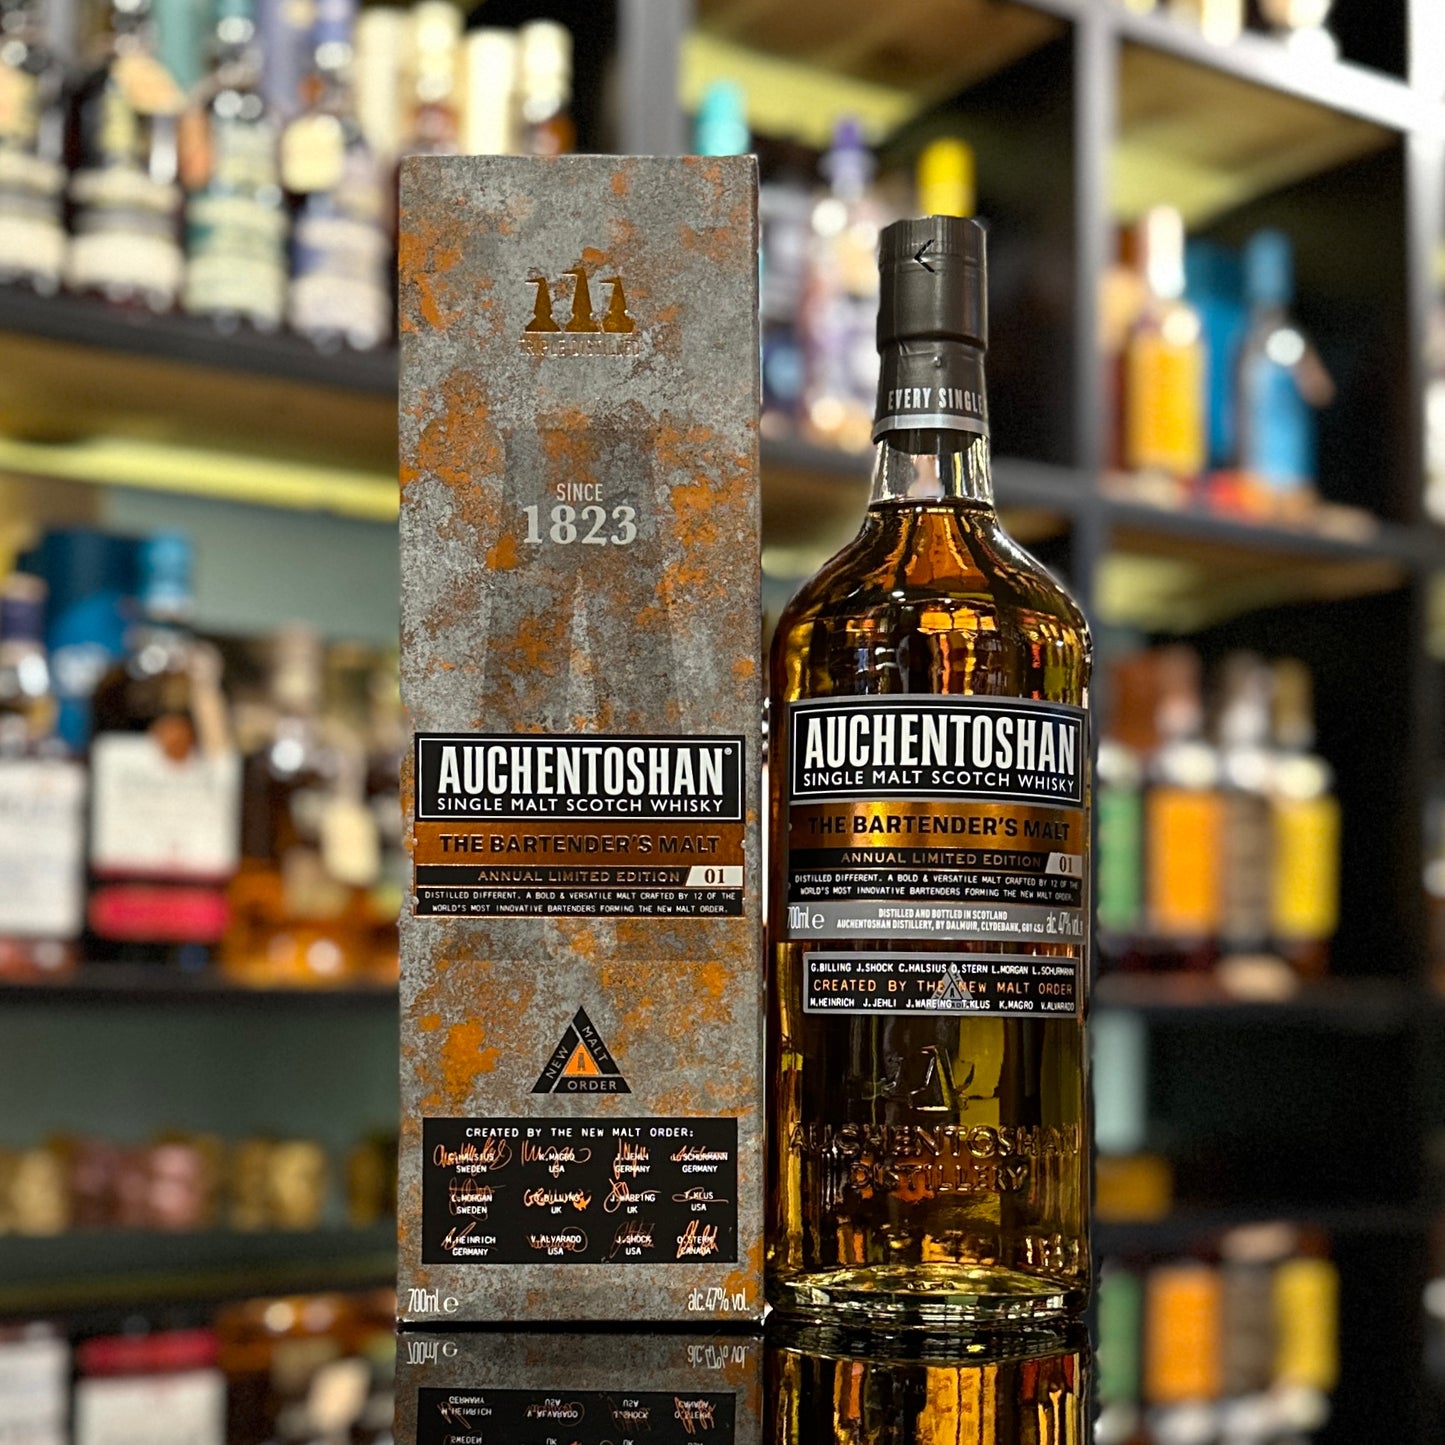 Auchentoshan Bartender’s Malt Limited Edition 01 Single Malt Scotch Whisky